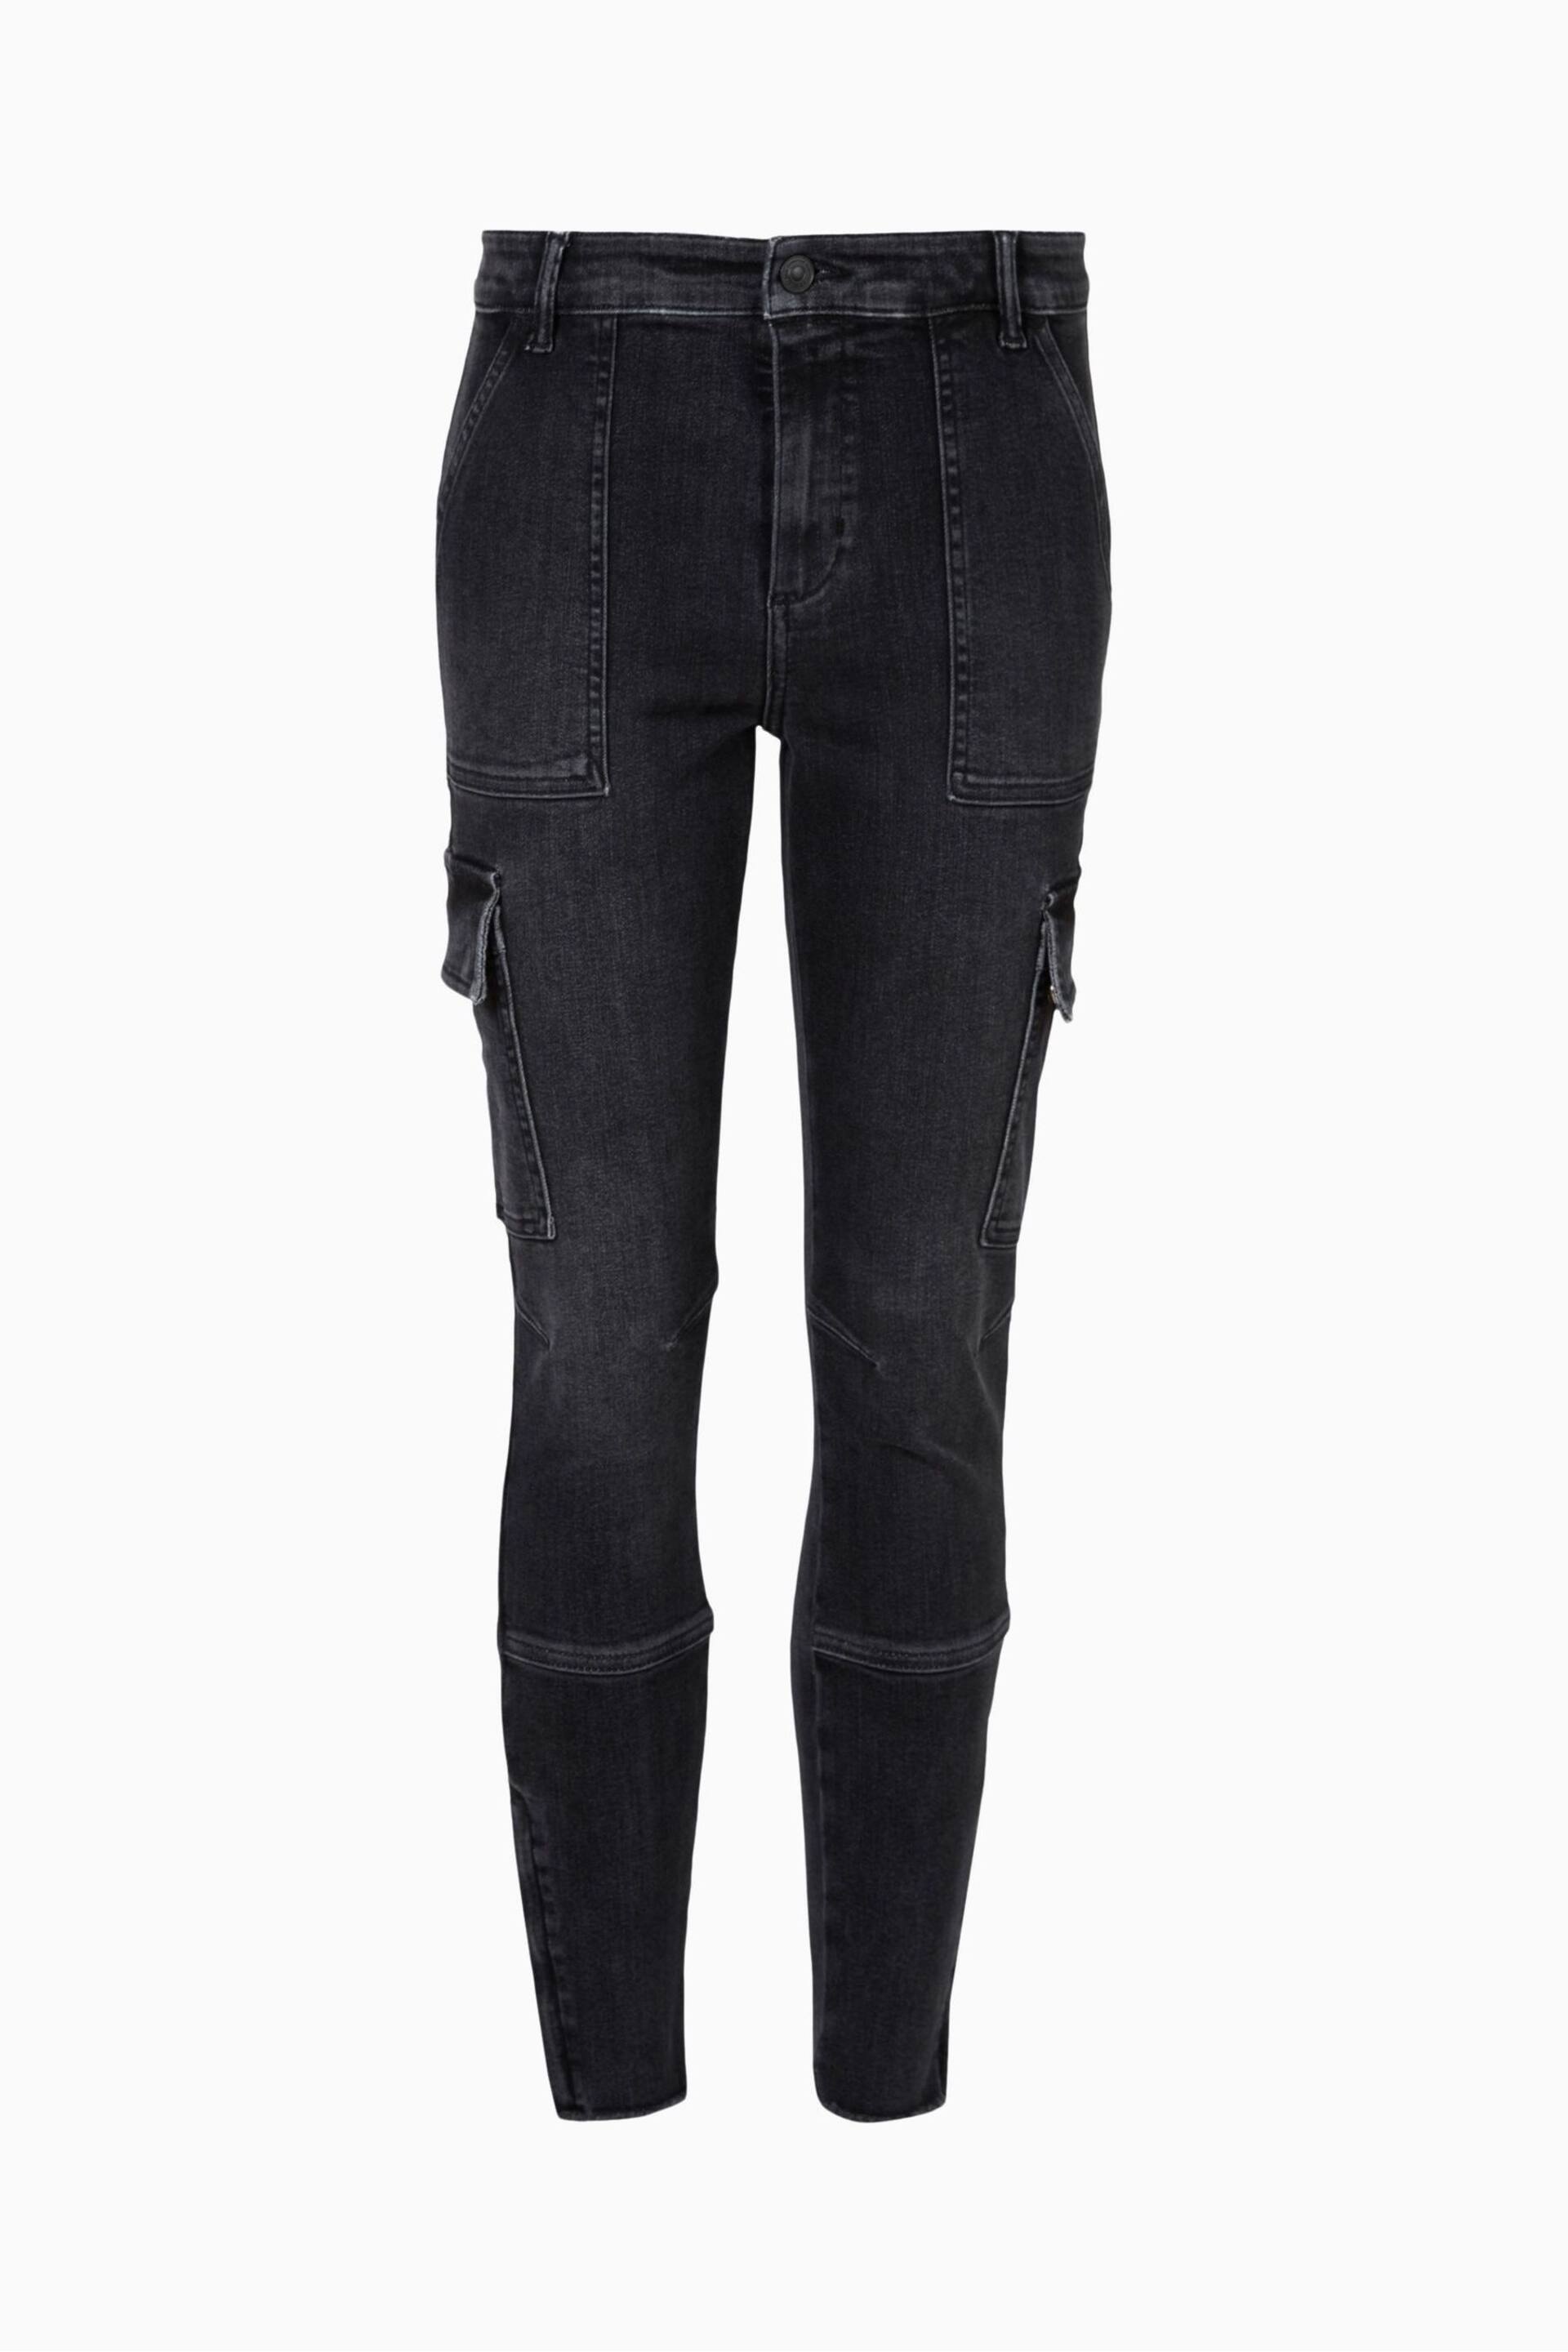 AllSaints Black Duran Skinny Cargo Jeans - Image 6 of 6